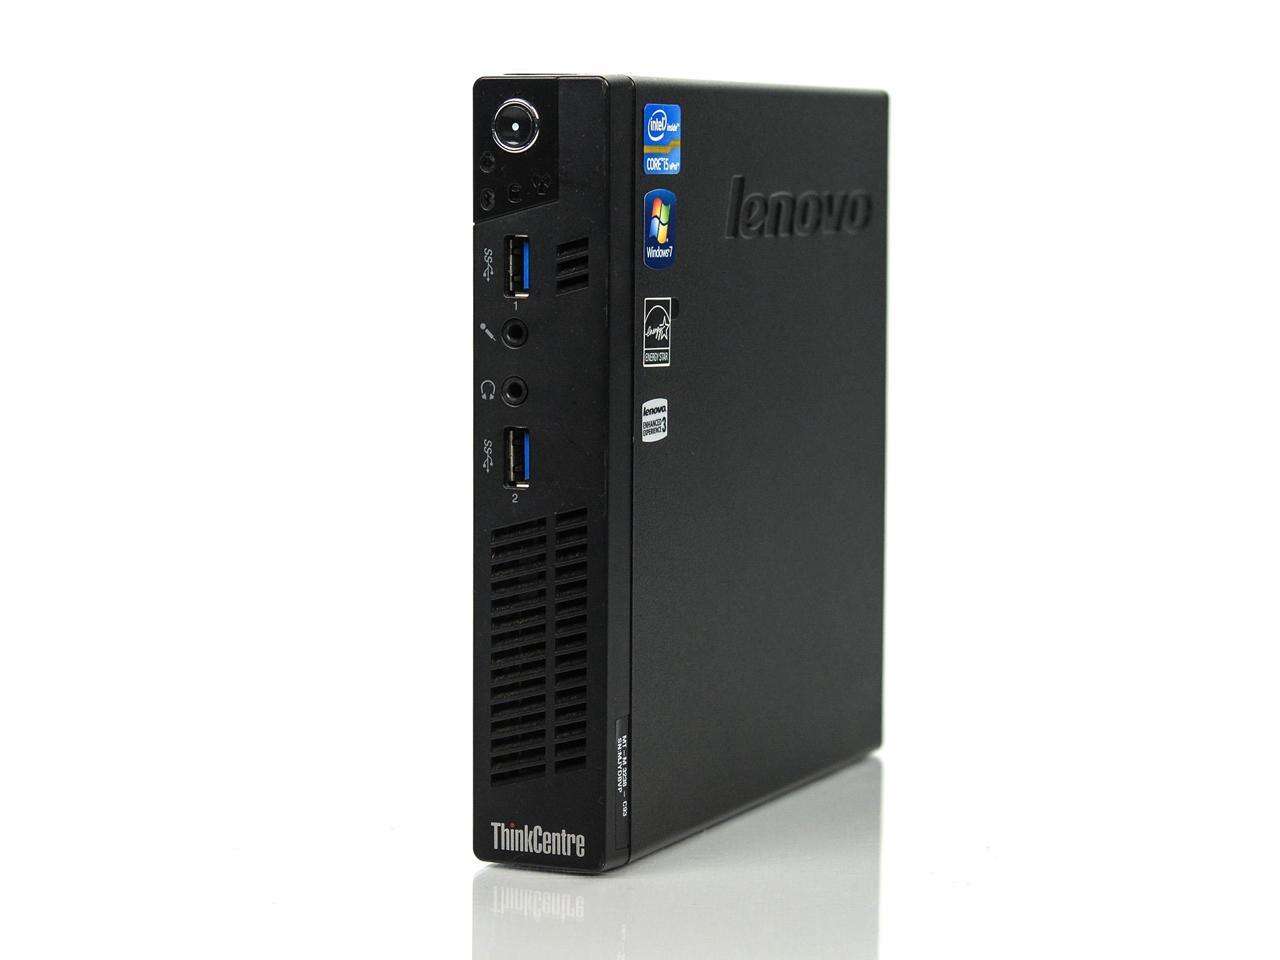 Lenovo ThinkCentre M92p Tiny i5-3470T 2.90GHz 4GB 500GB Win 10 Pro 1 Yr Wty